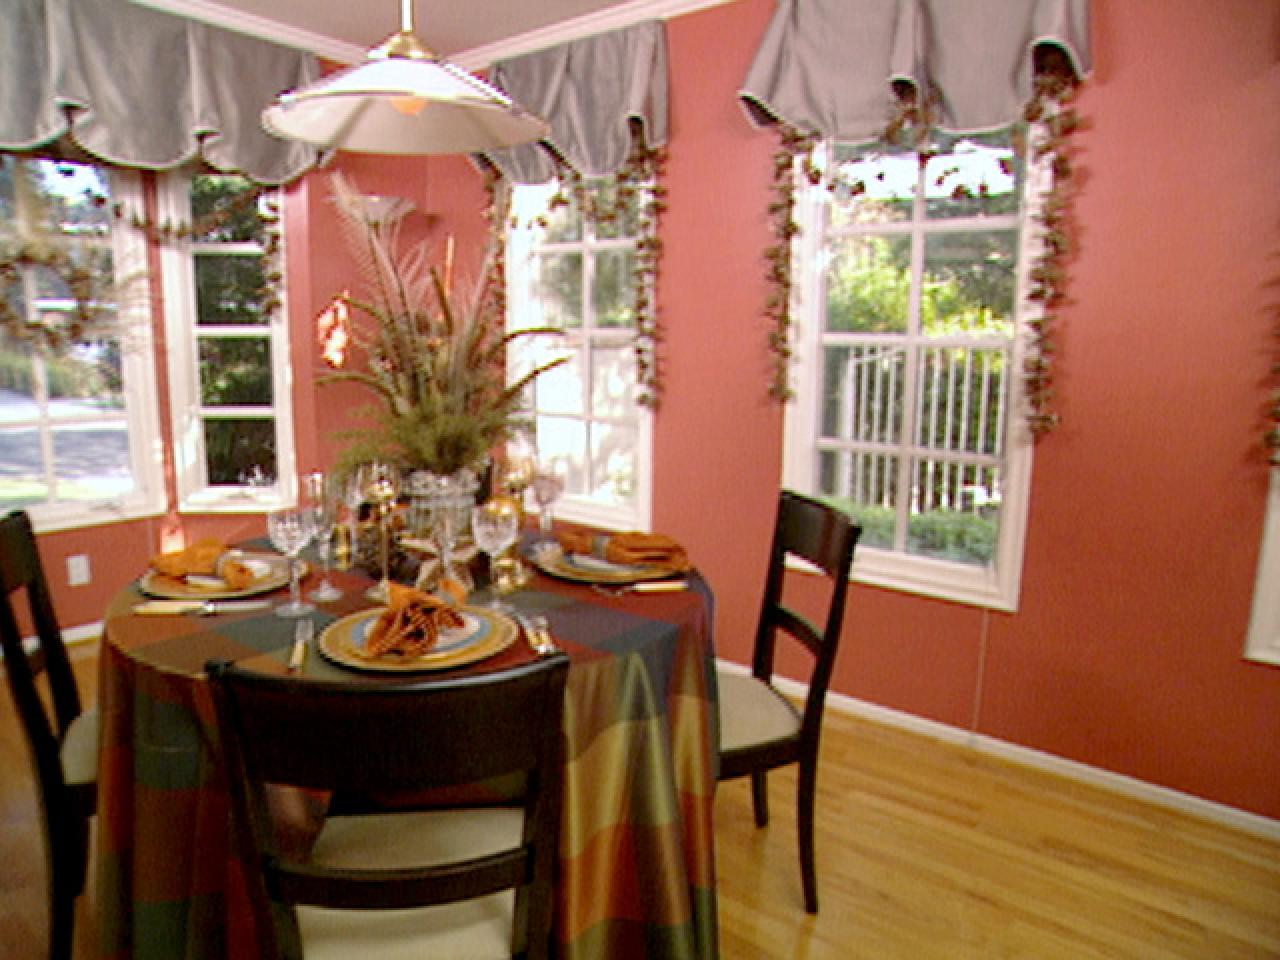 Floor Length Round Tablecloth, Dining Room Tablecloth Ideas